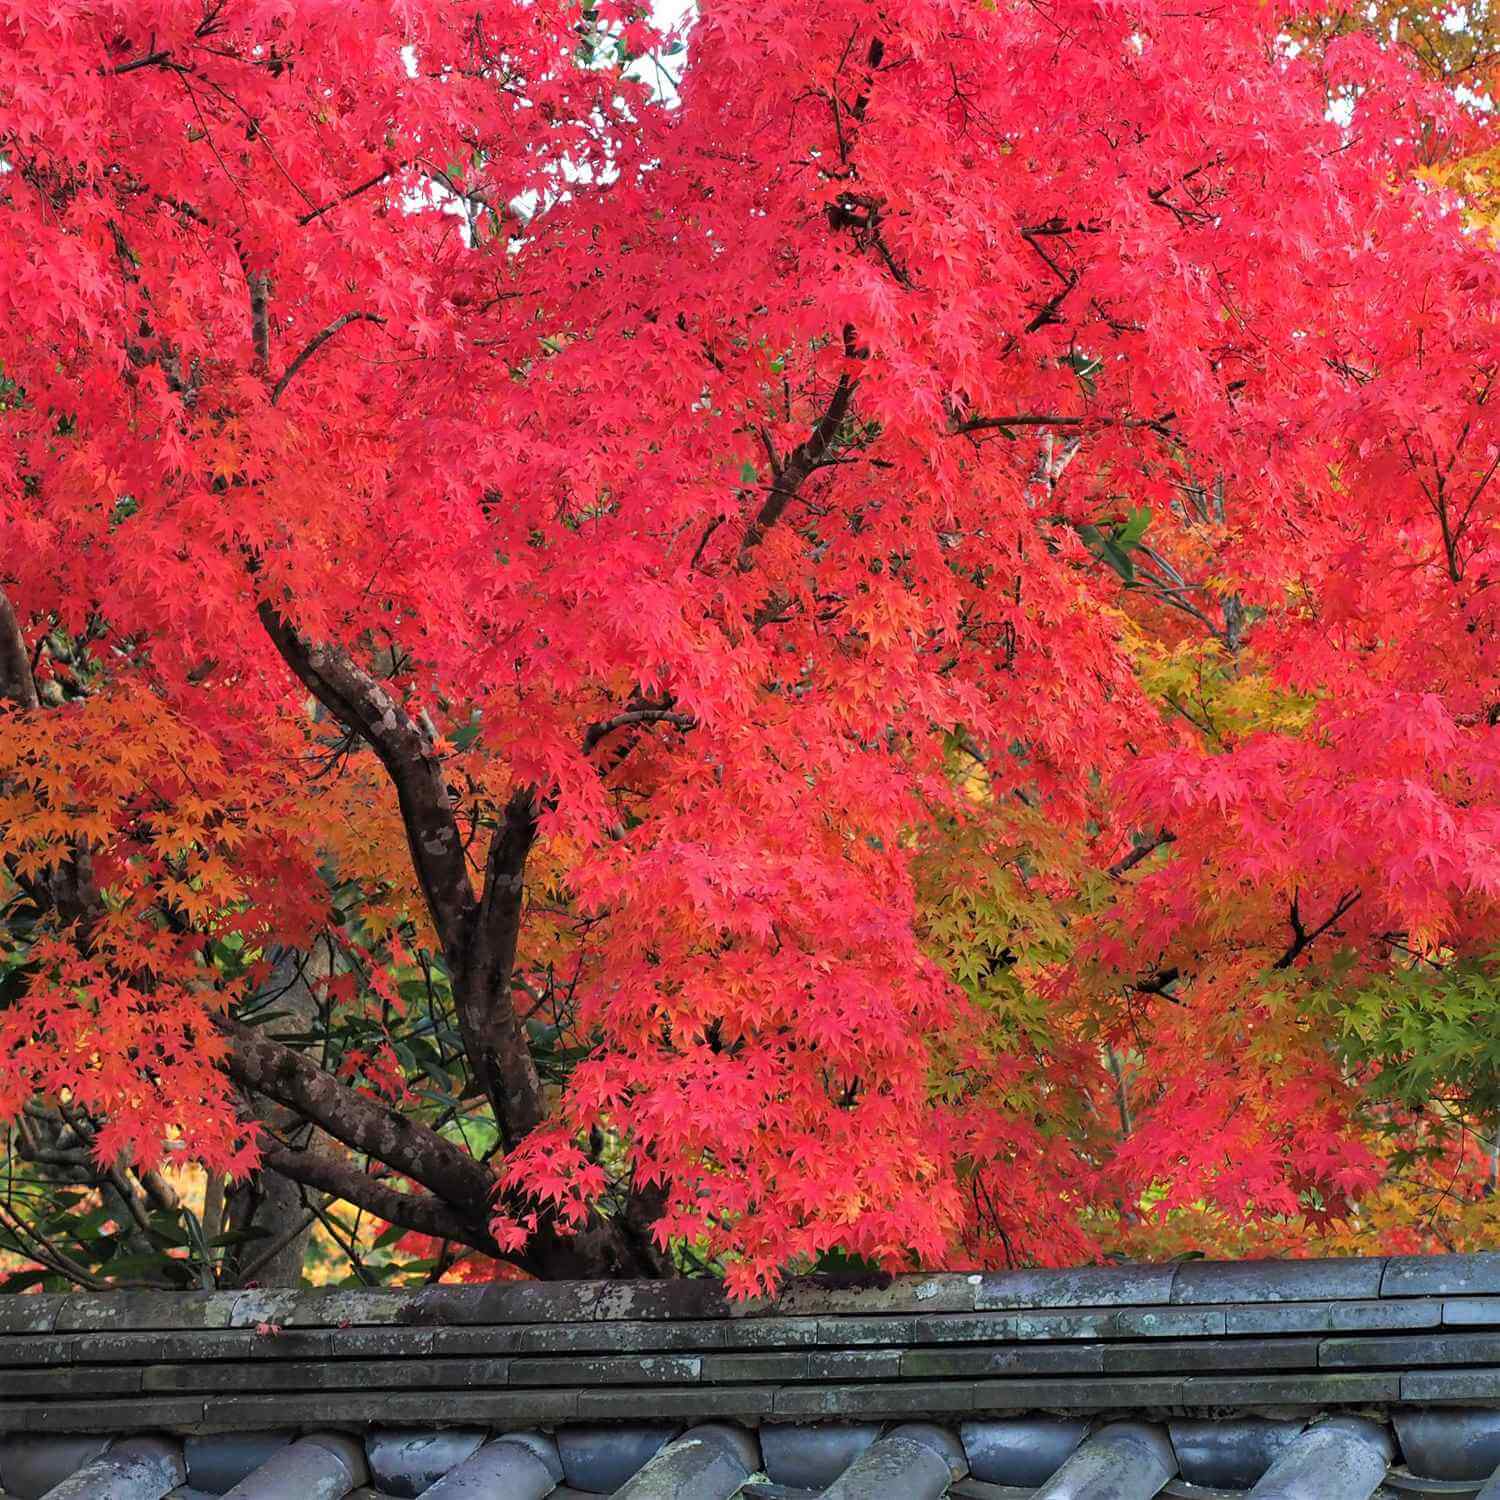 Autumn Leaves in Kyoto = AdobeStock 9